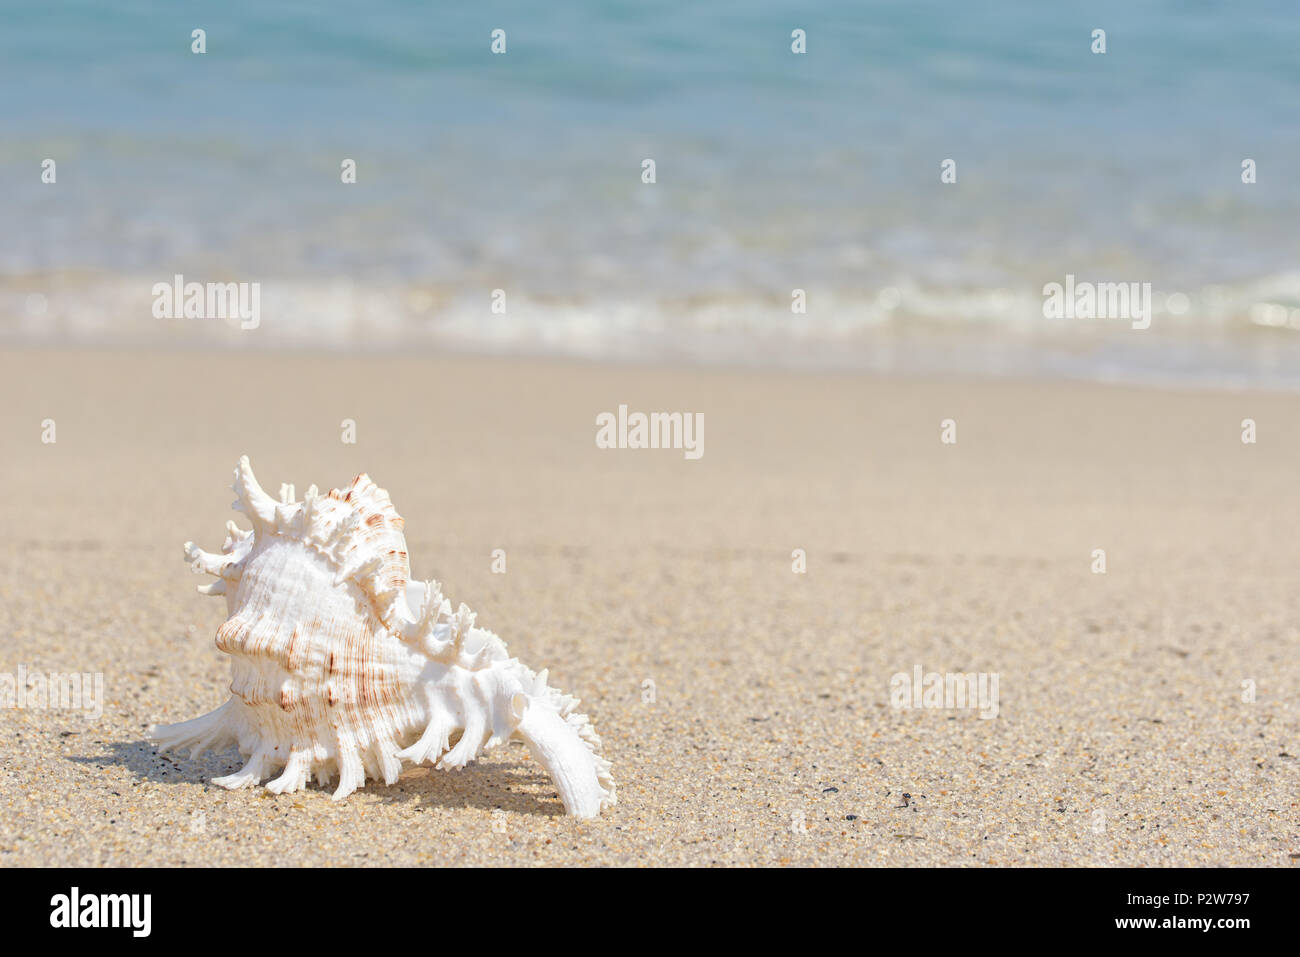 Shell. Sea mollusk. Seashell on sandy beach Stock Photo